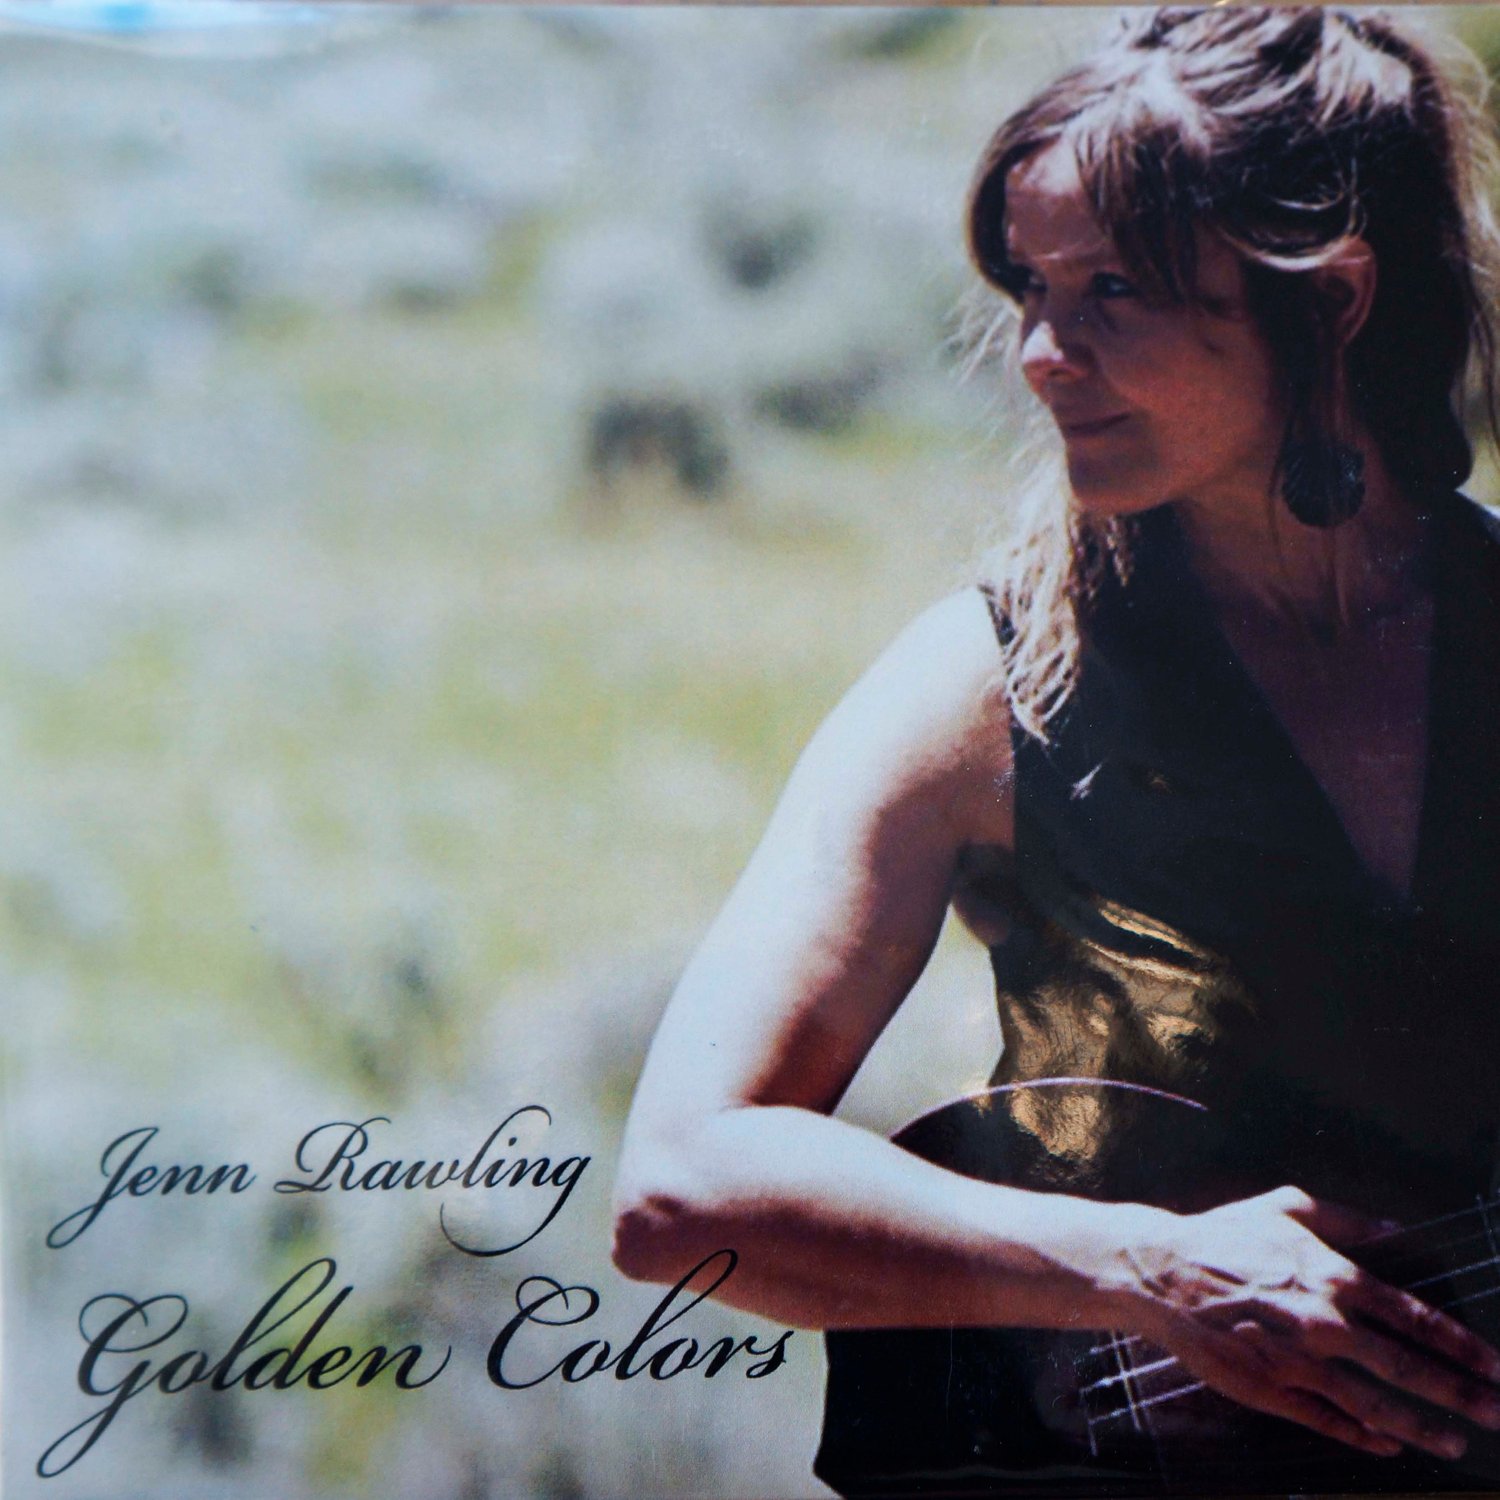 "Golden Colors" by Jenn Rawling